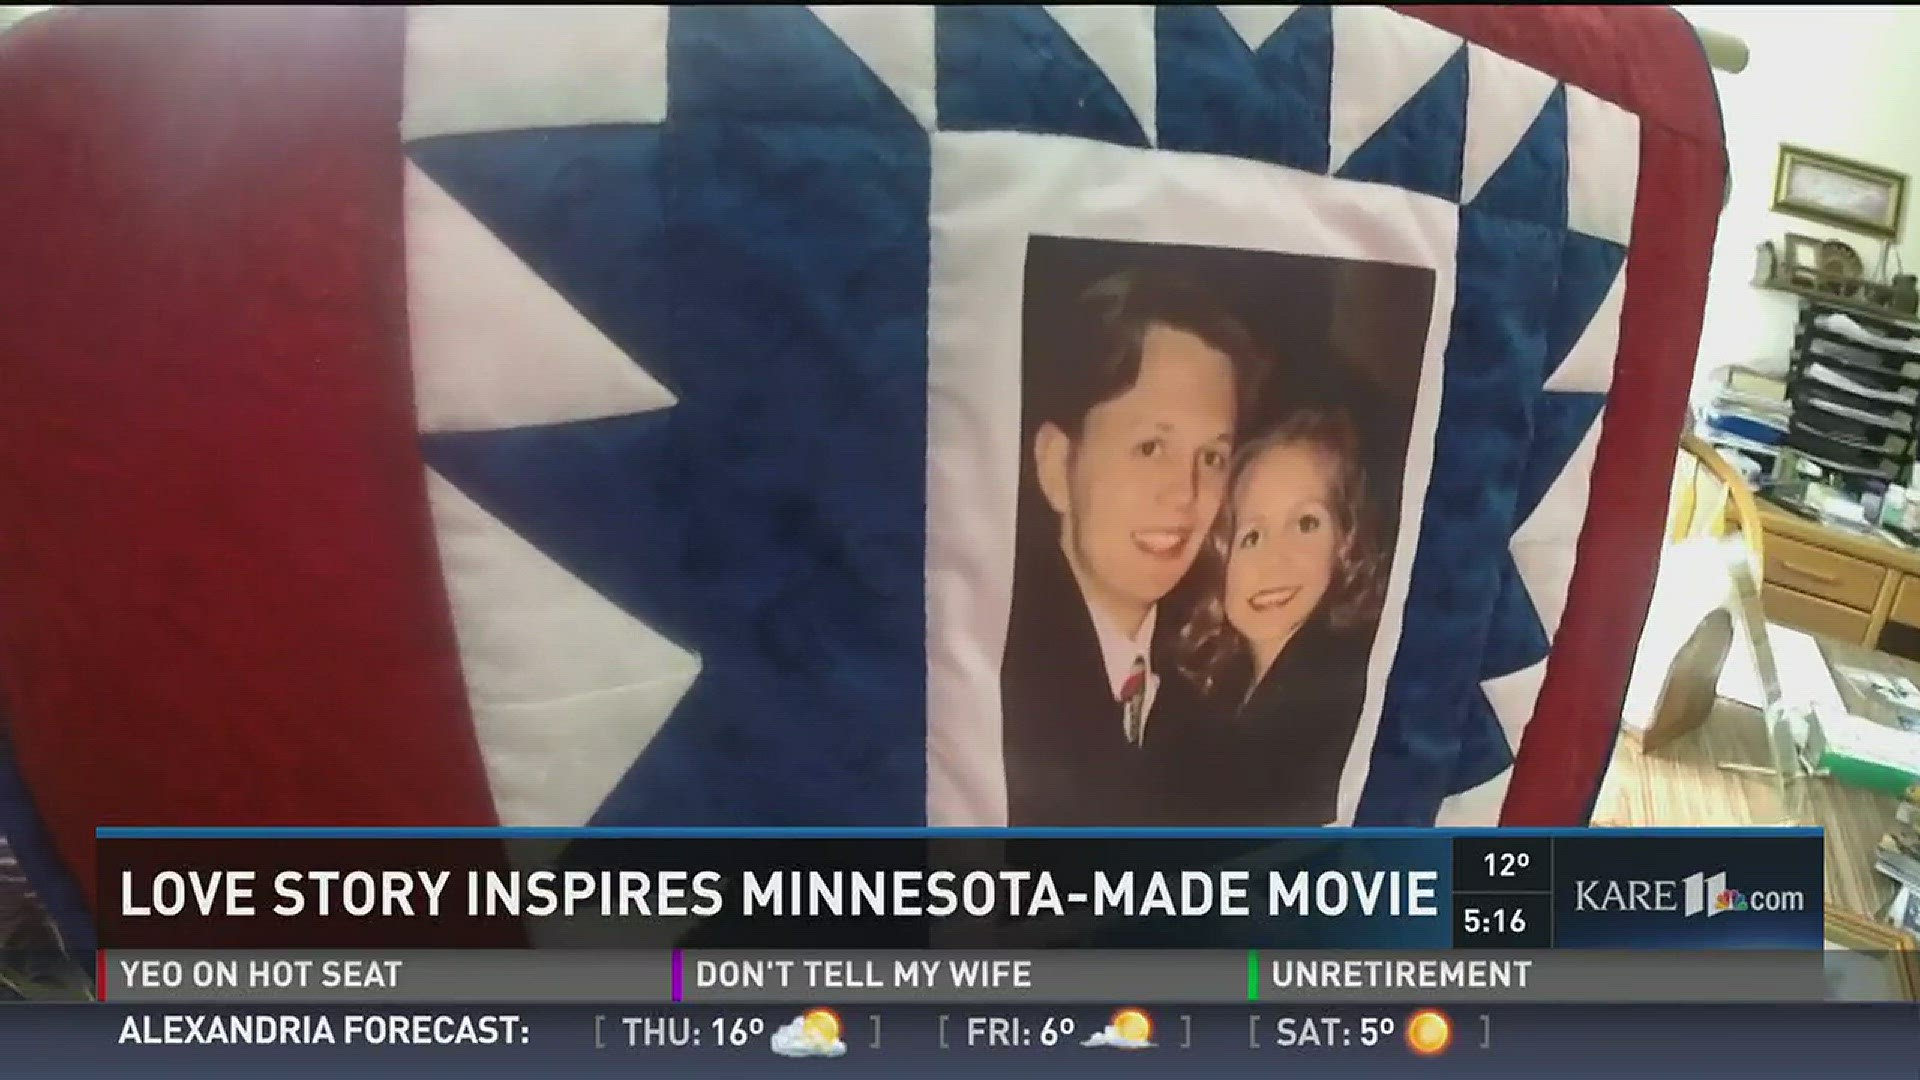 Love story inspires Minnesota-made movie